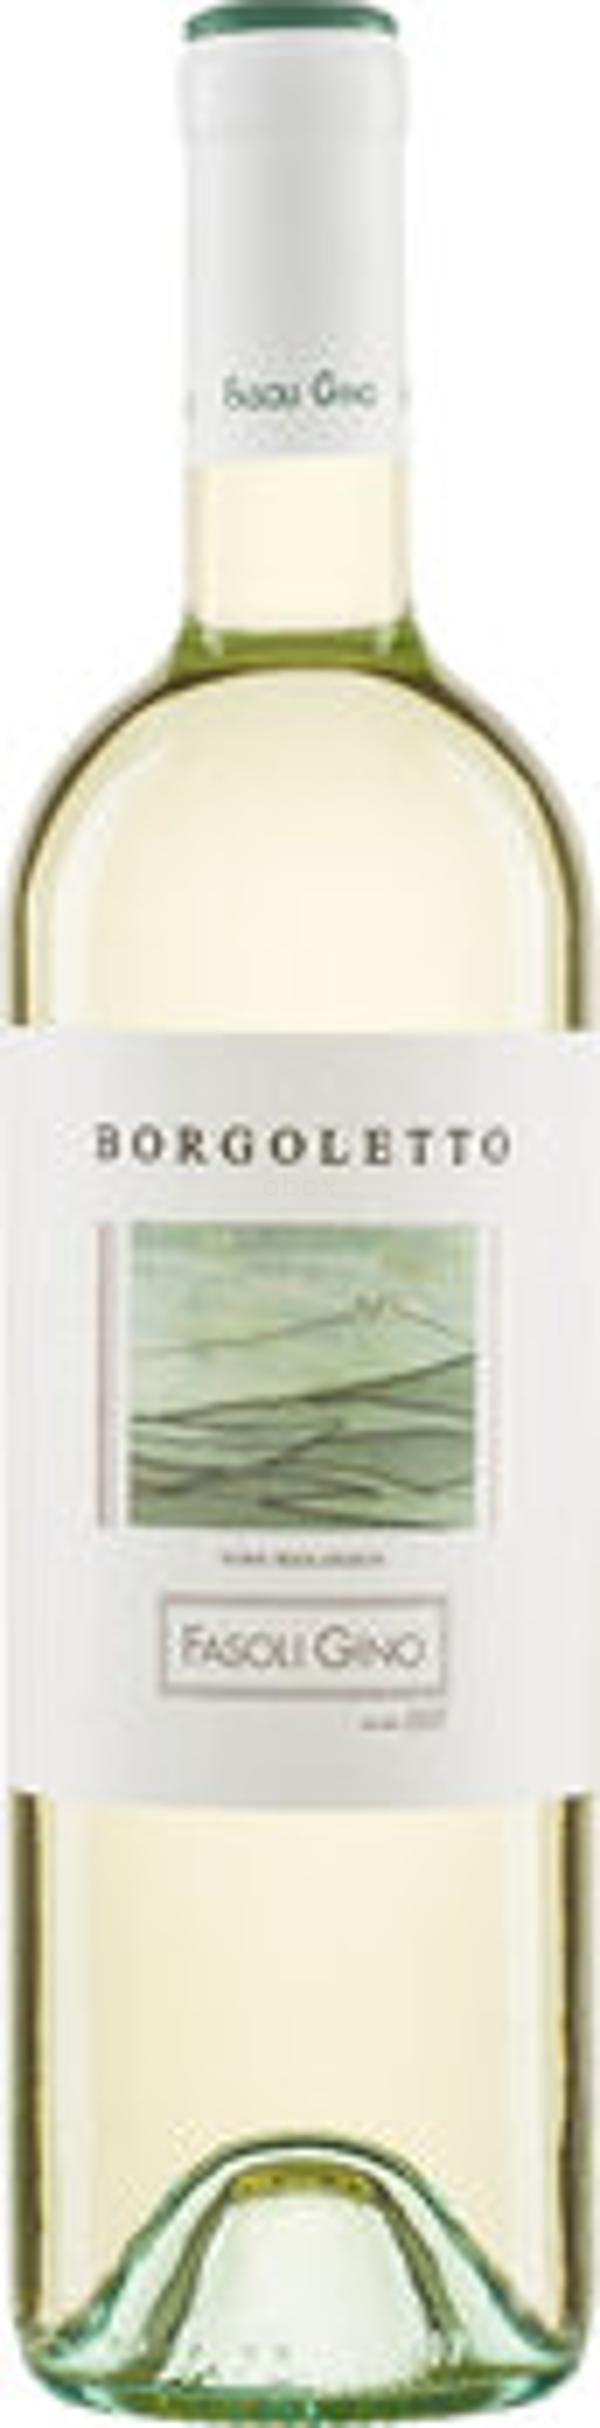 Produktfoto zu BORGOLETTO Bianco Veronese IGT